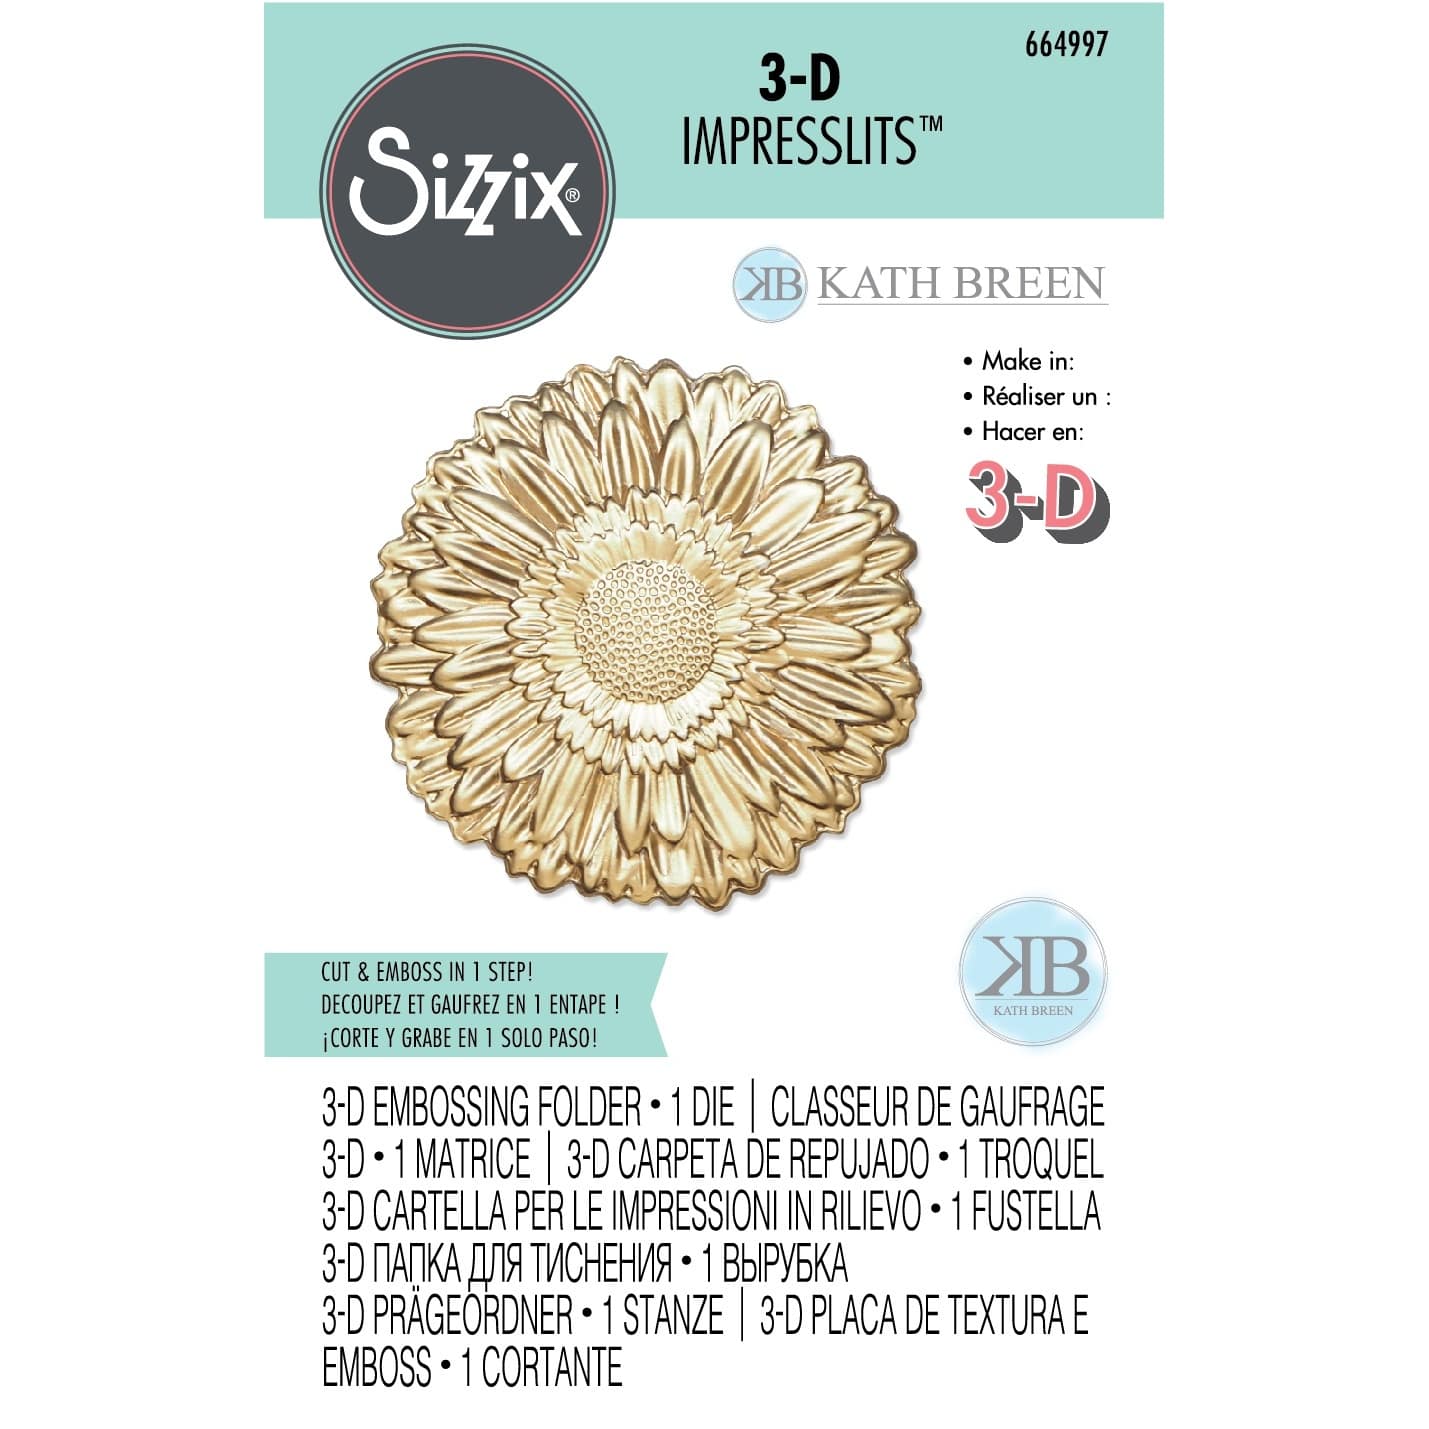 Sizzix 3-D Impresslits Embossing Folder Lace Border by Kath Breen 665744 One Size Multicolor 